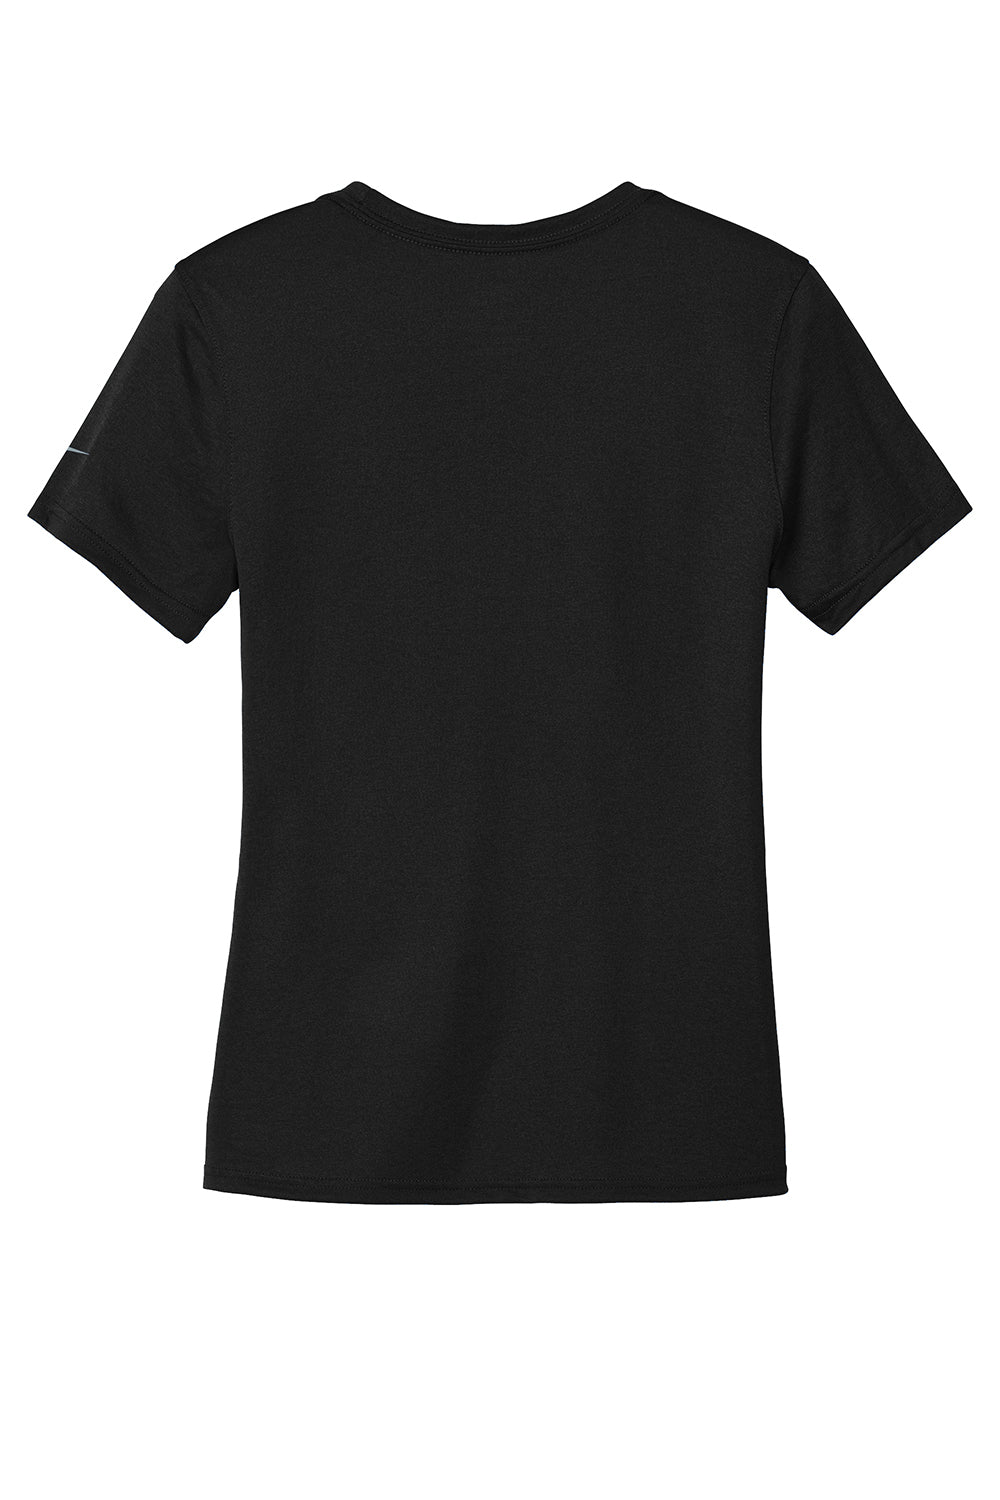 Nike NKDX8734 Womens rLegend Dri-Fit Moisture Wicking Short Sleeve Crewneck T-Shirt Black Flat Back